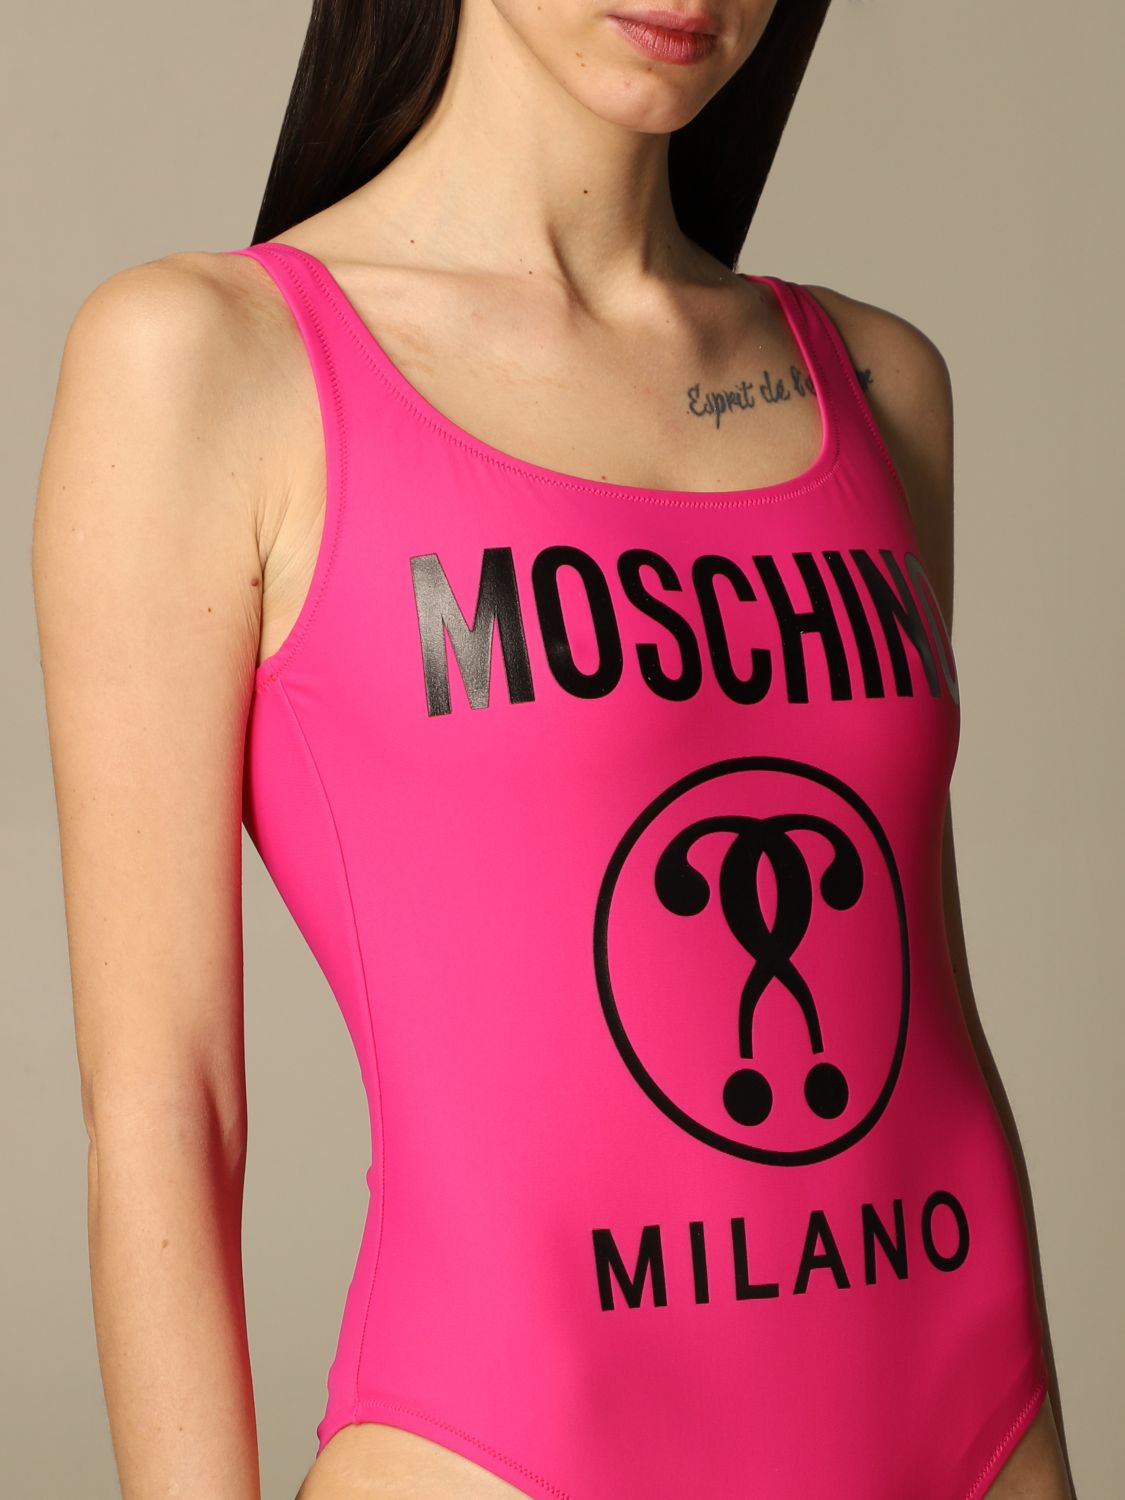 MOSCHINO UNDERWEAR: one-piece swimsuit with big logo | Swimsuit ...